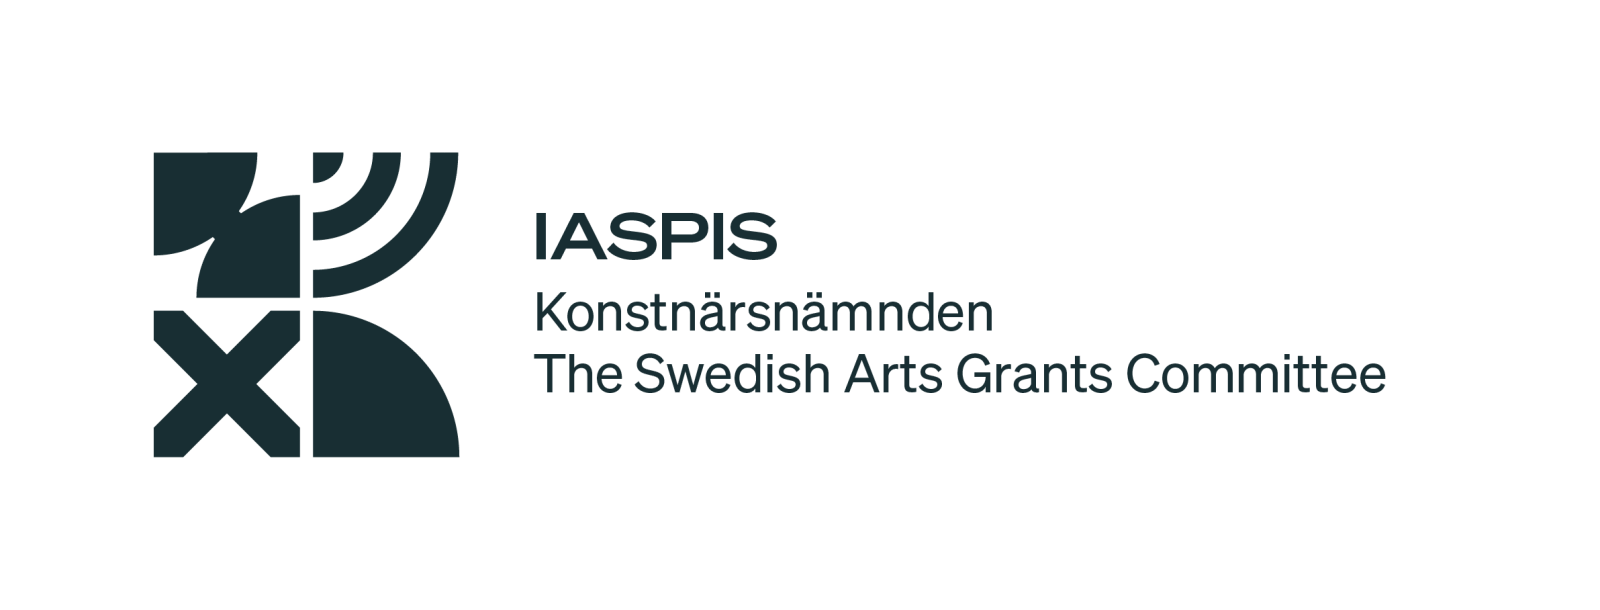 IASPIS The Swedish Arts Grants Committee